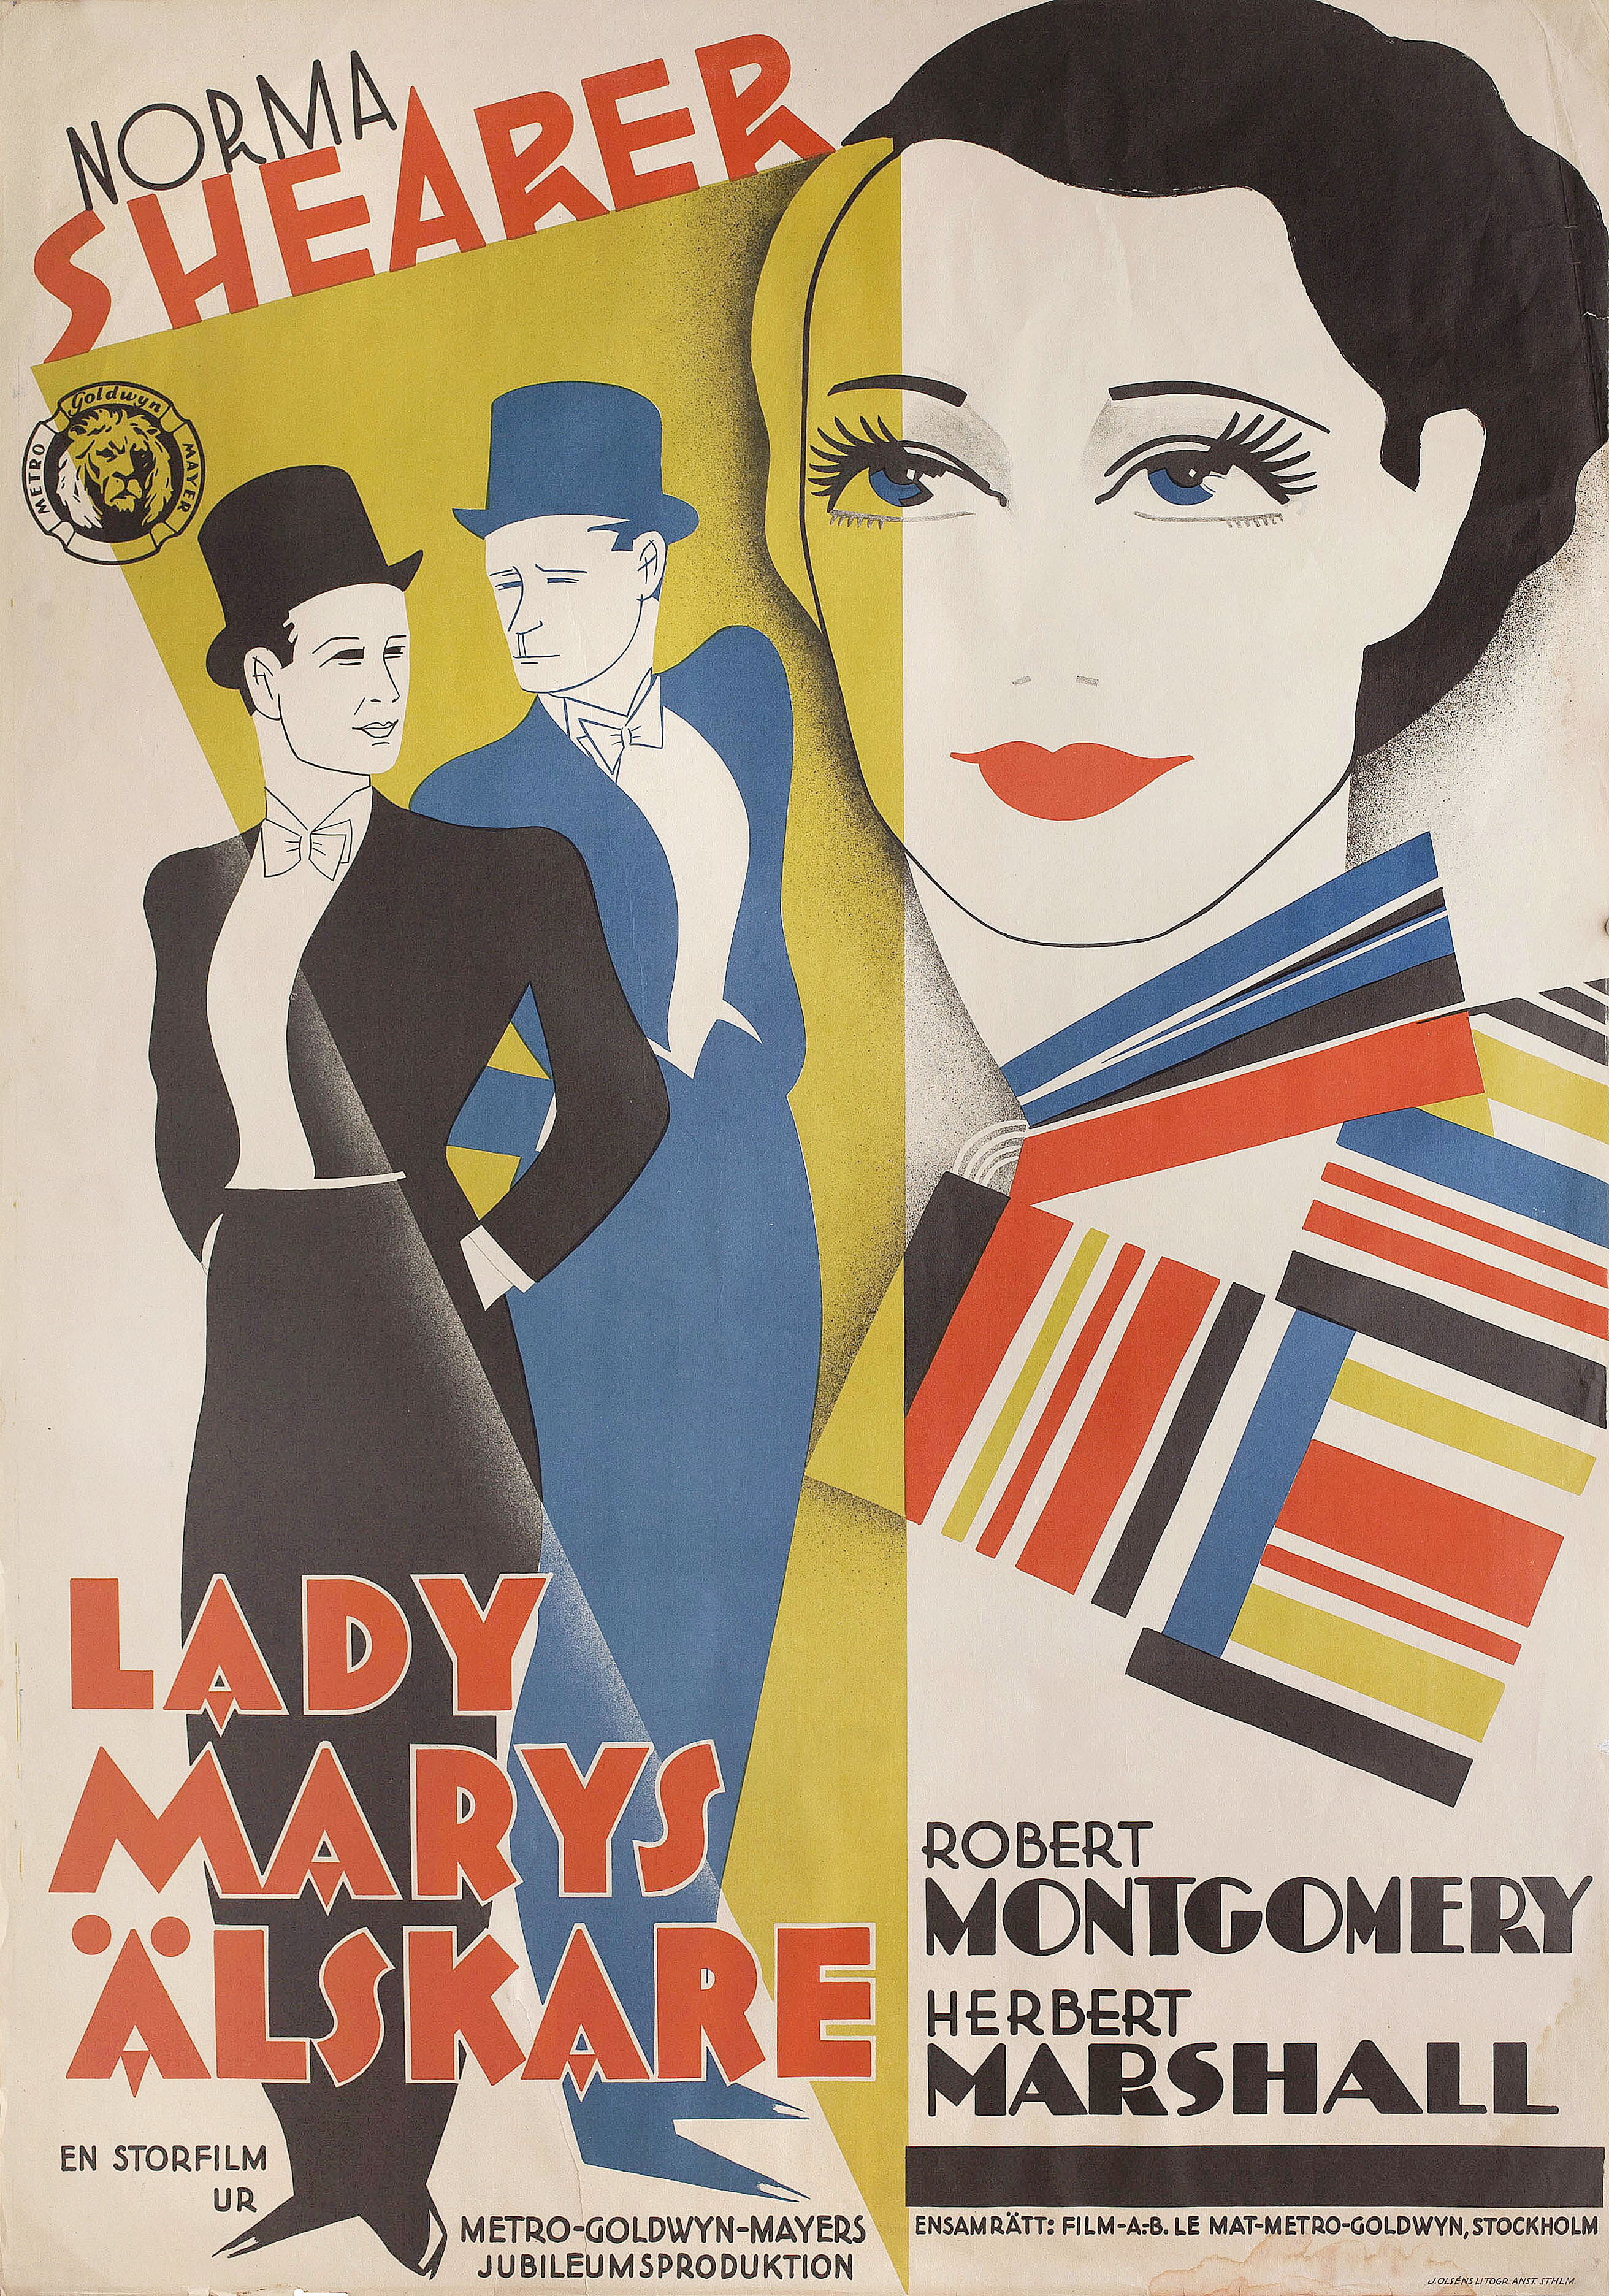 Риптид (Riptide, 1934), режиссёр Эдмунд Гулдинг, постер к фильму в стиле ар-деко (Швеция, 1934 год)